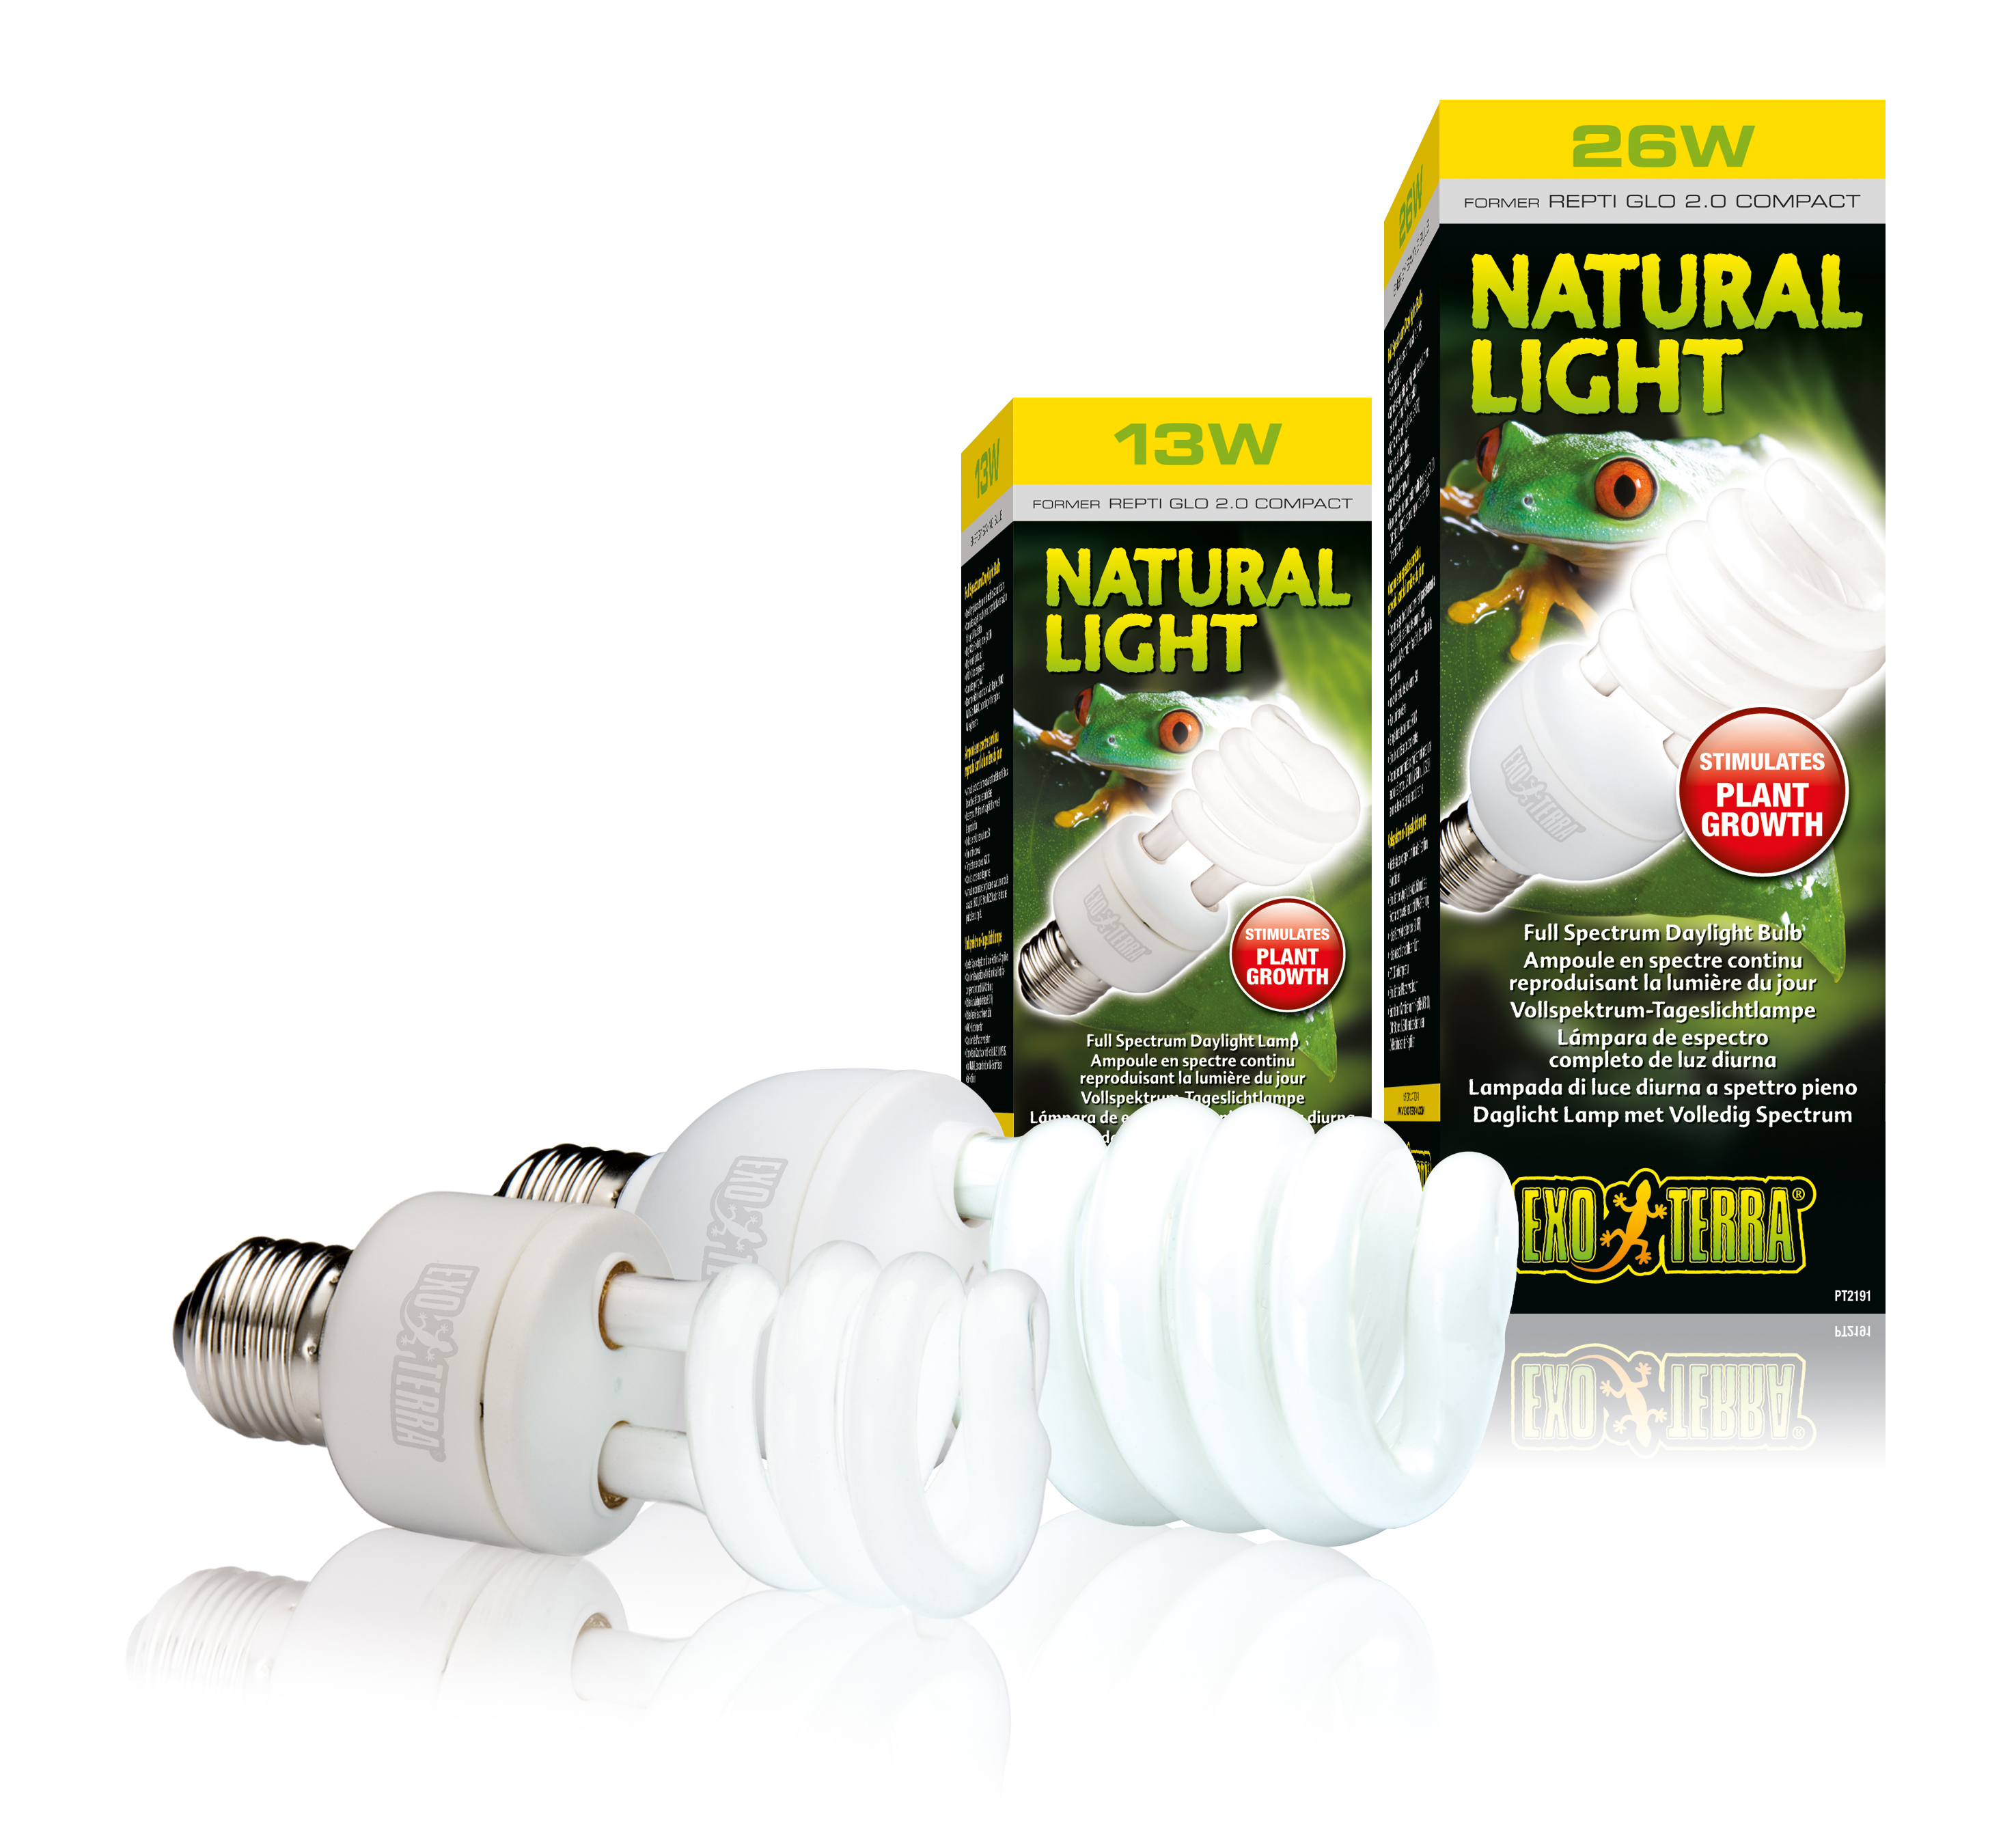 Ex natural light fluocompact - <Product shot>